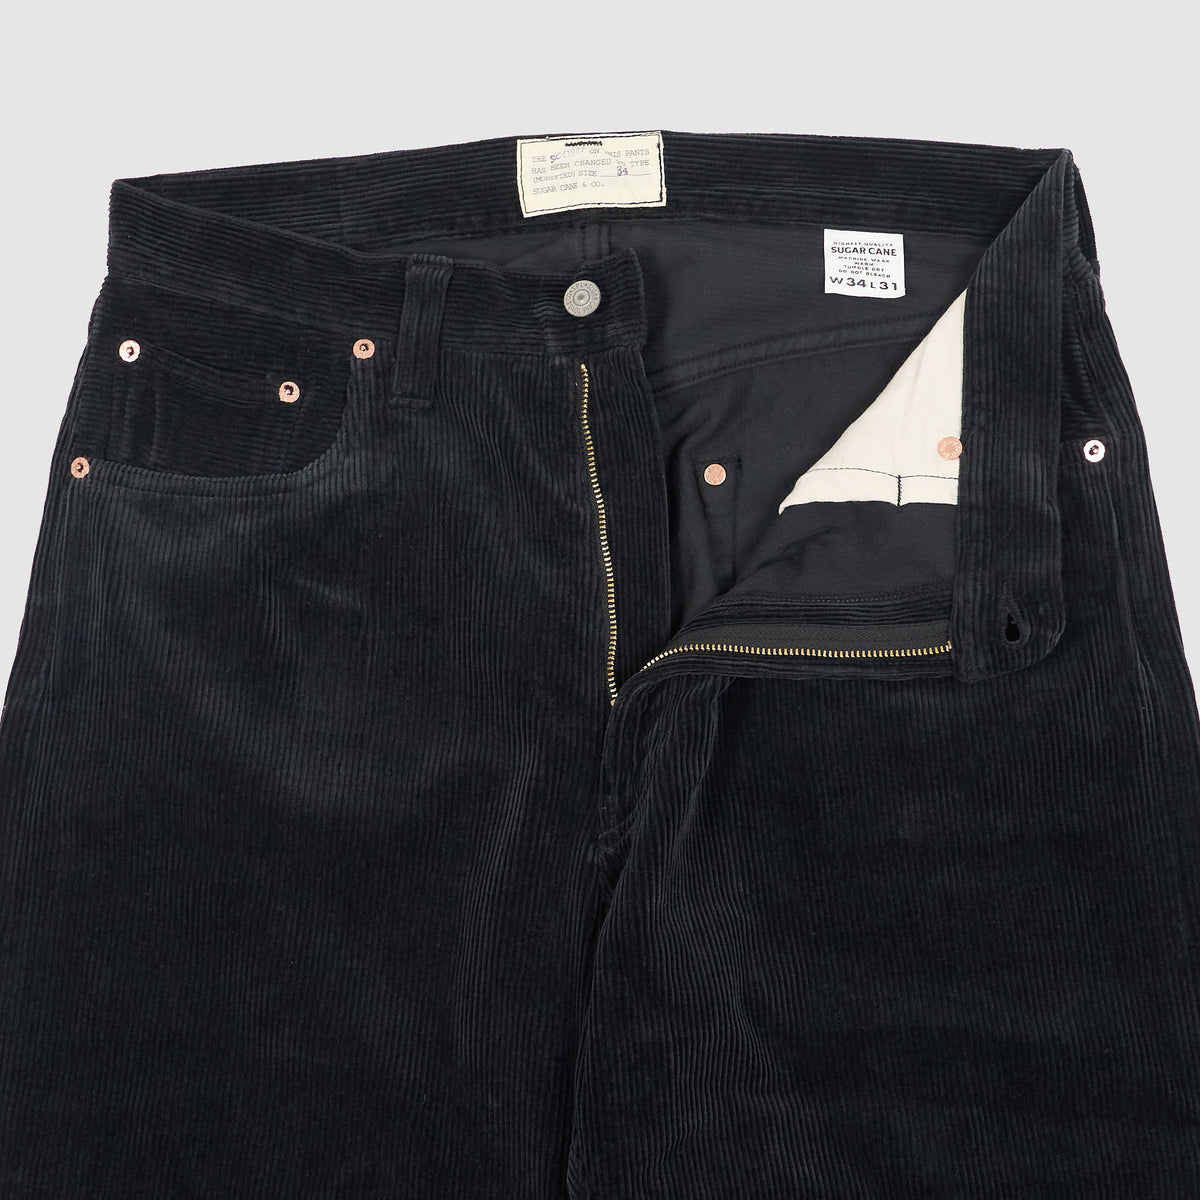 Sugar Cane 5-Pocket 1947 Straight Leg corduroy jeans